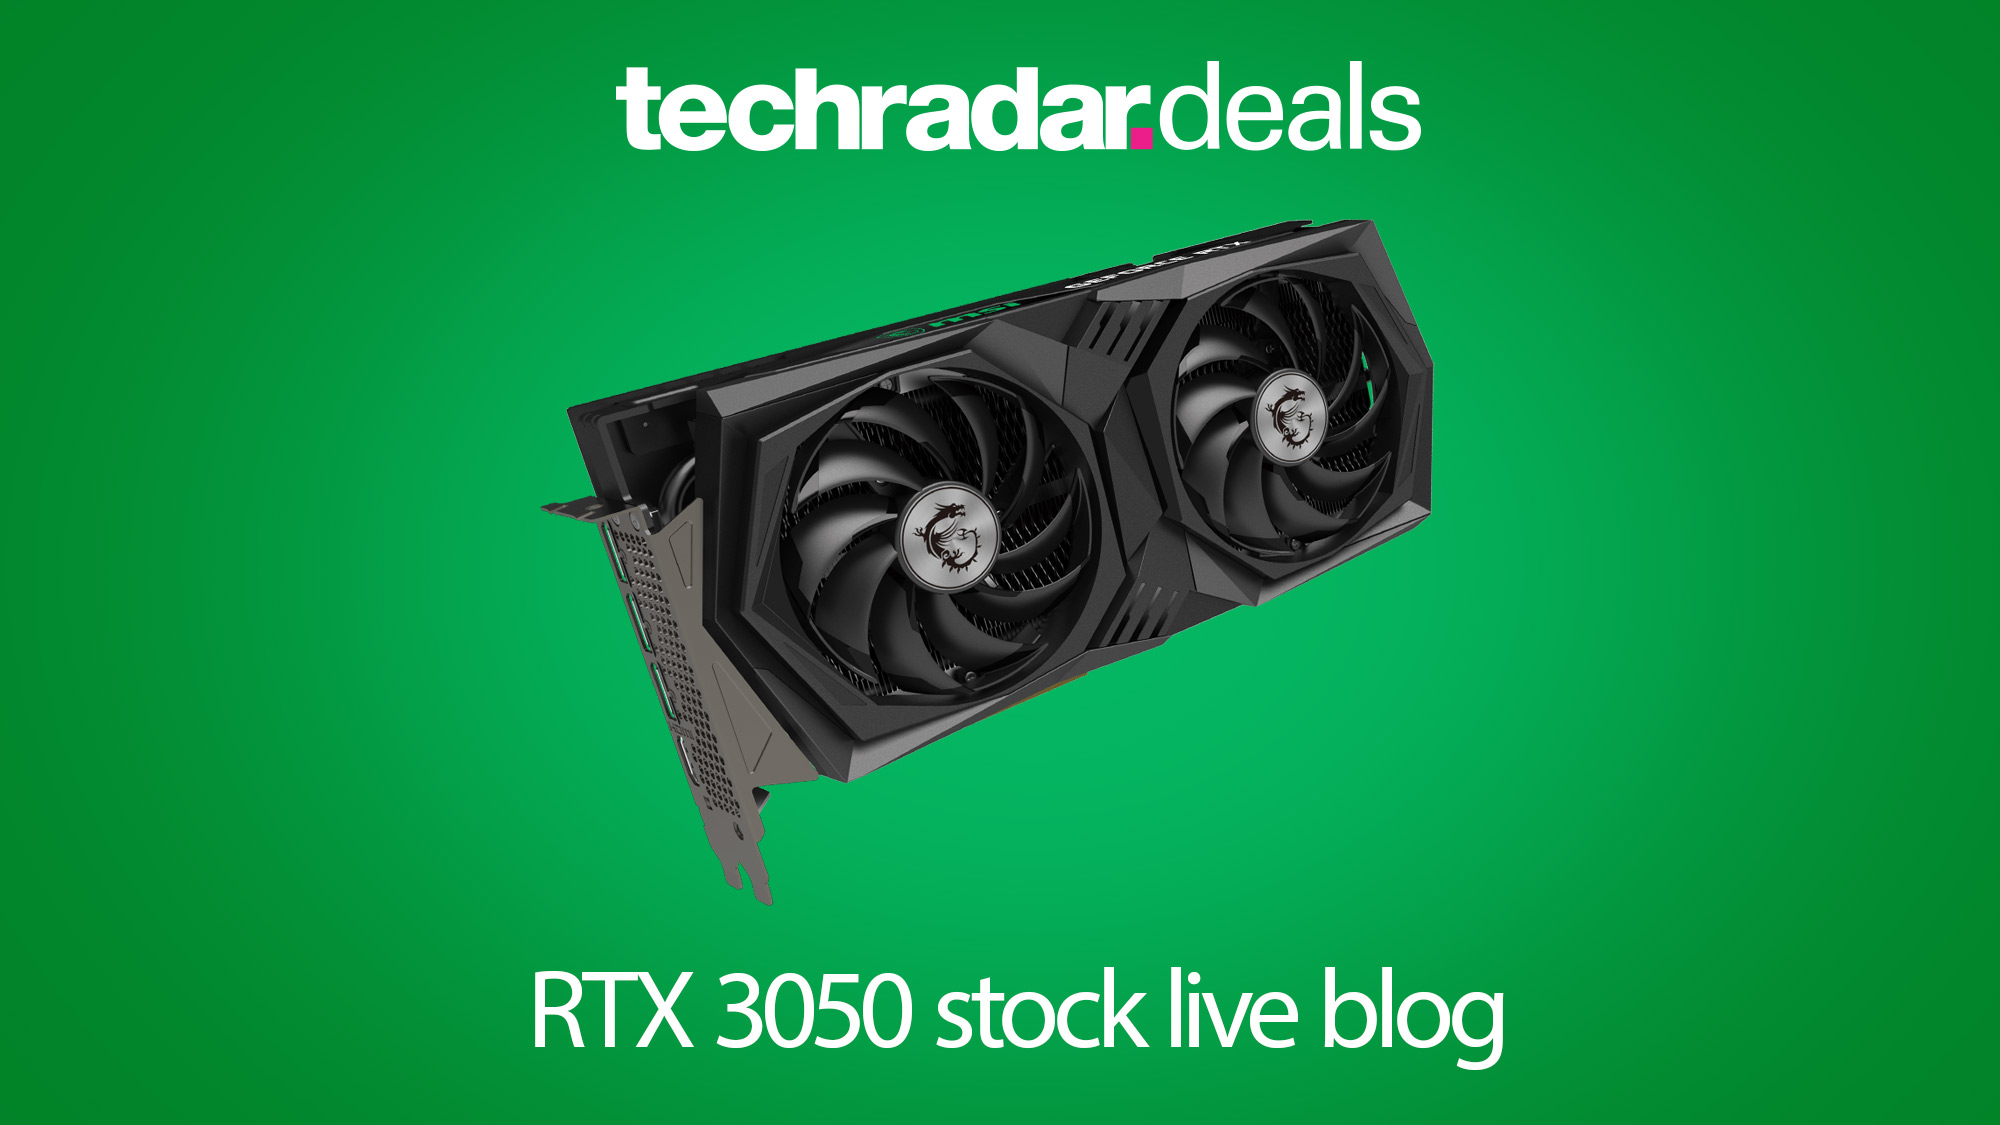 RTX 3050 stock live blog header green background